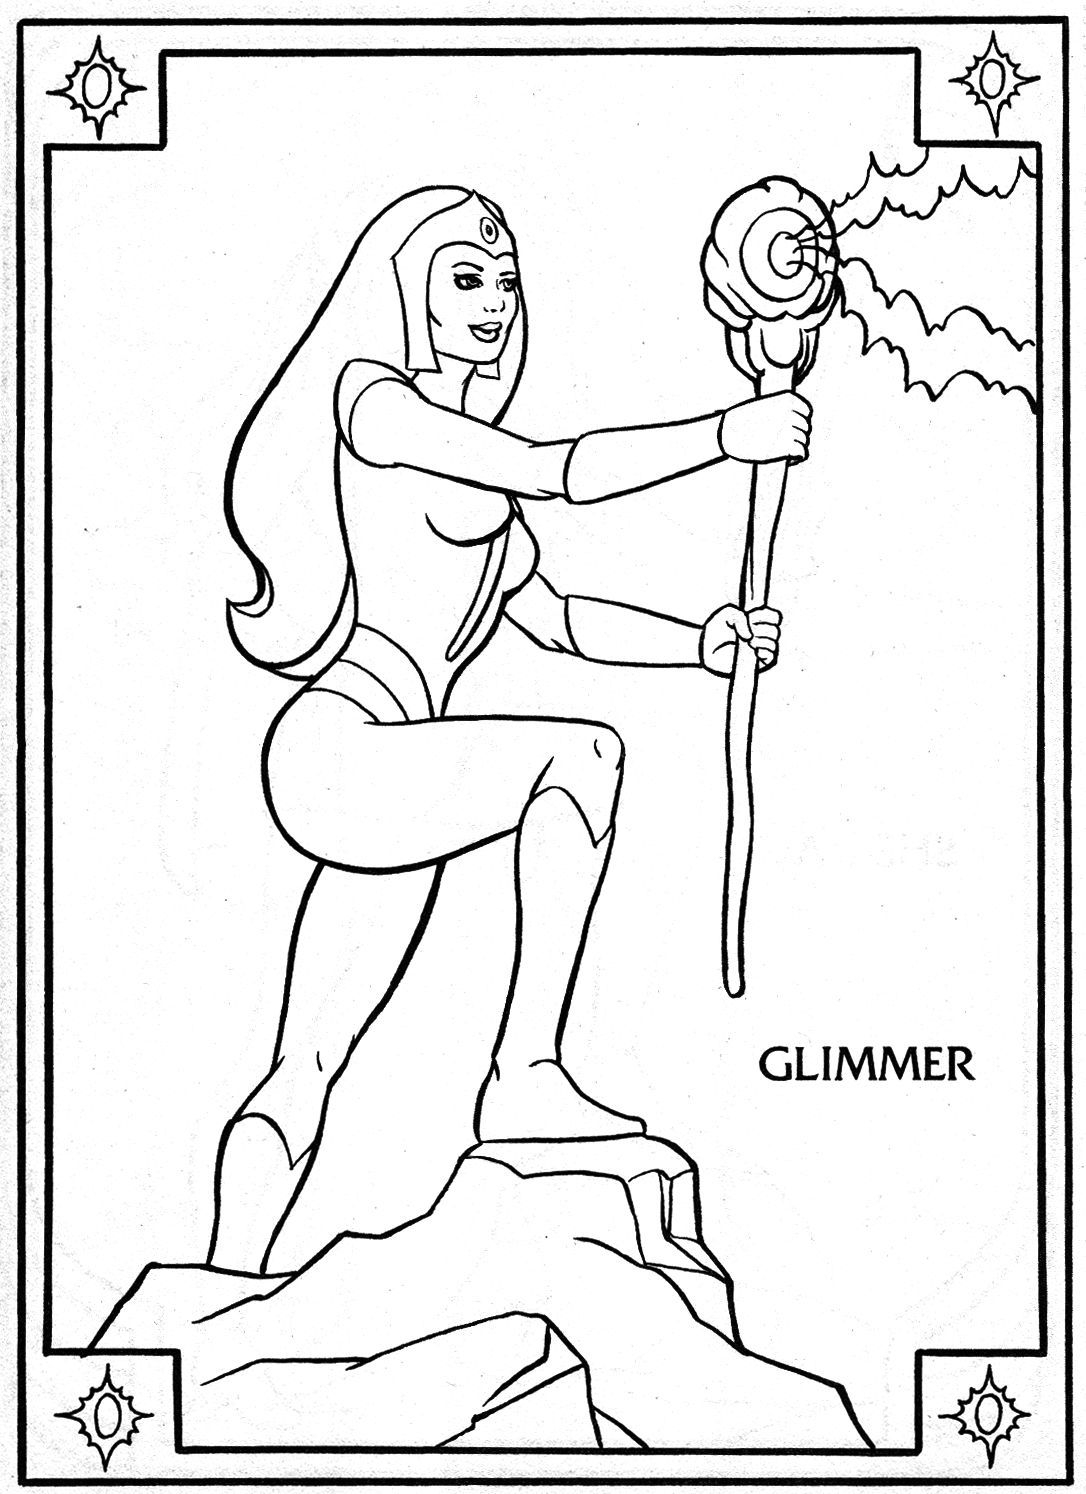 She-Ra: Princess of Power (1985) - coloring book 19